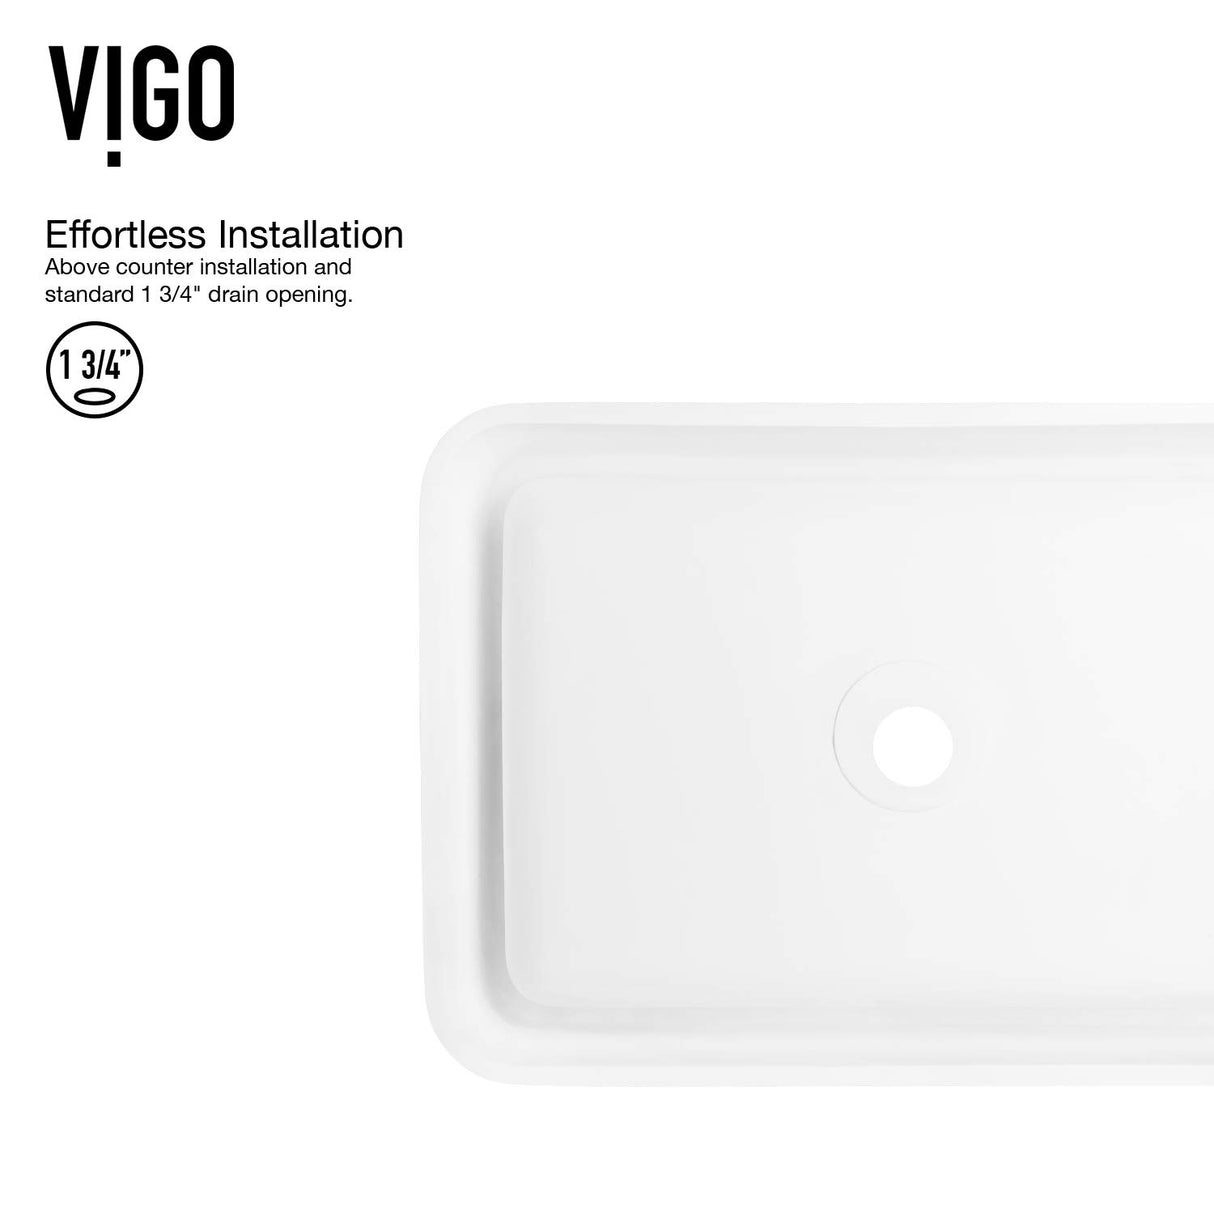 VIGO VGT980 15.75" L -22.75" W -5.13" H Matte Stone Petunia Composite Rectangular Vessel Bathroom Sink in White with Faucet and Pop-Up Drain in Matte Black